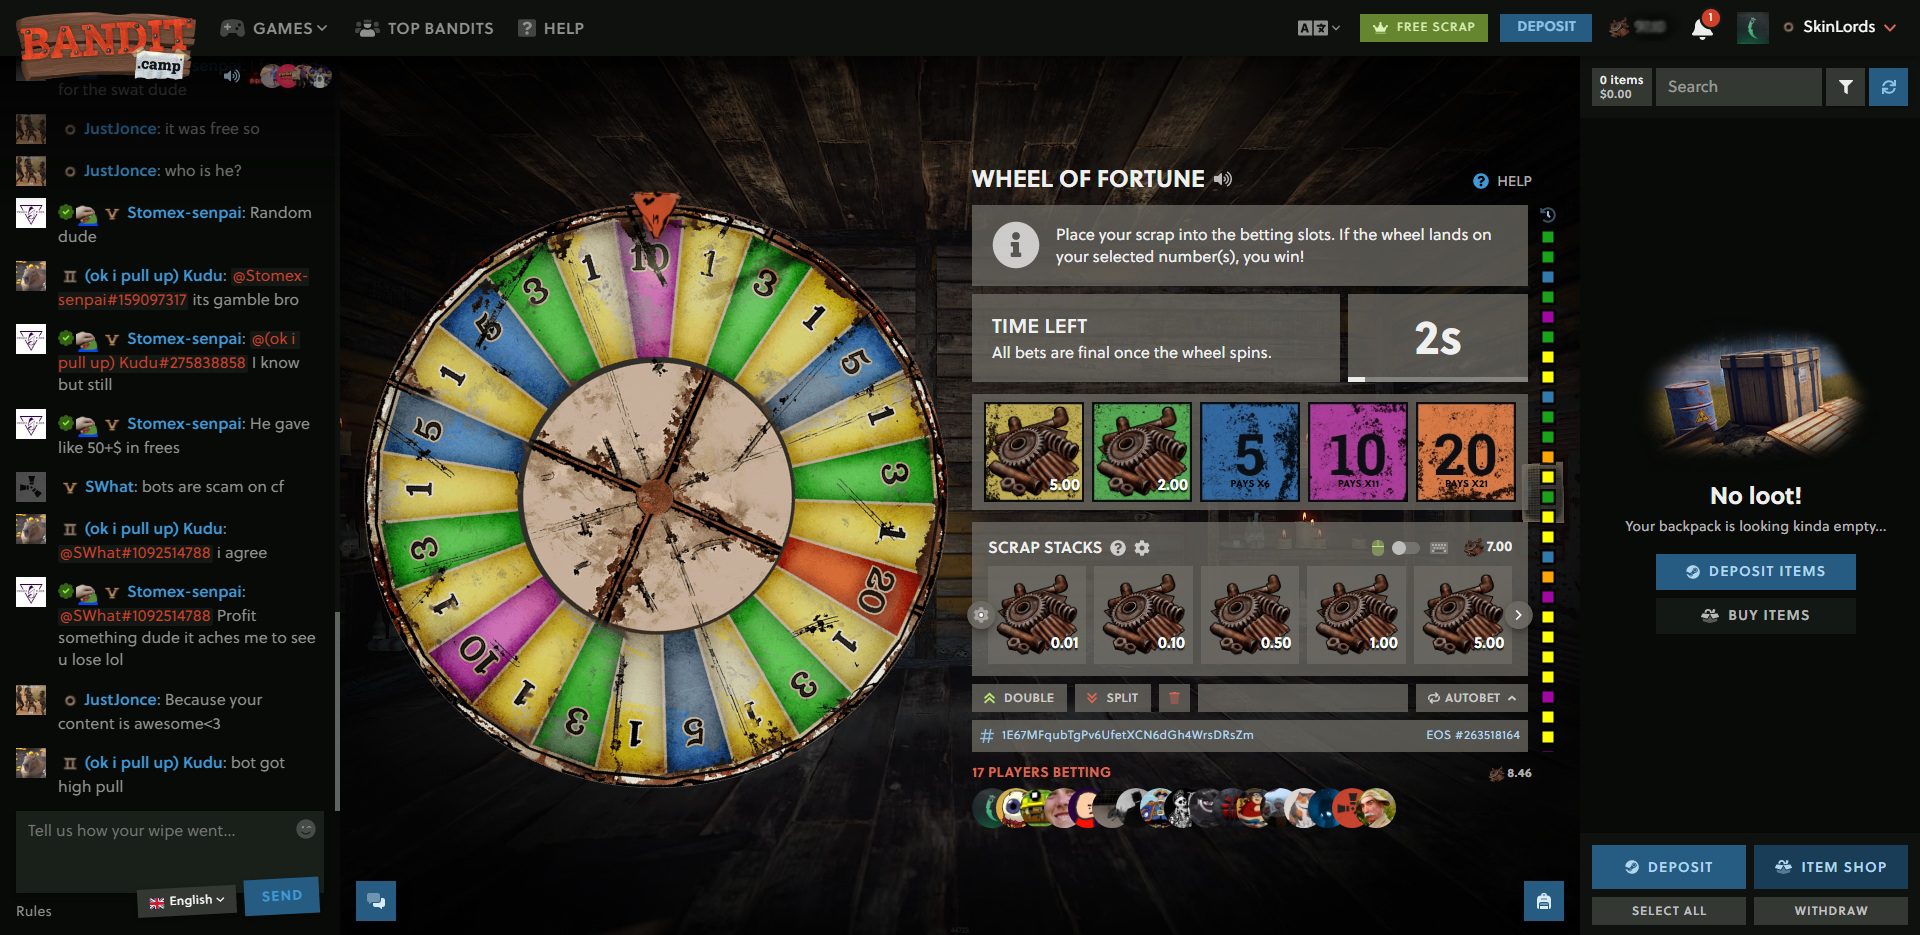 BanditCamp Wheel of Fortune